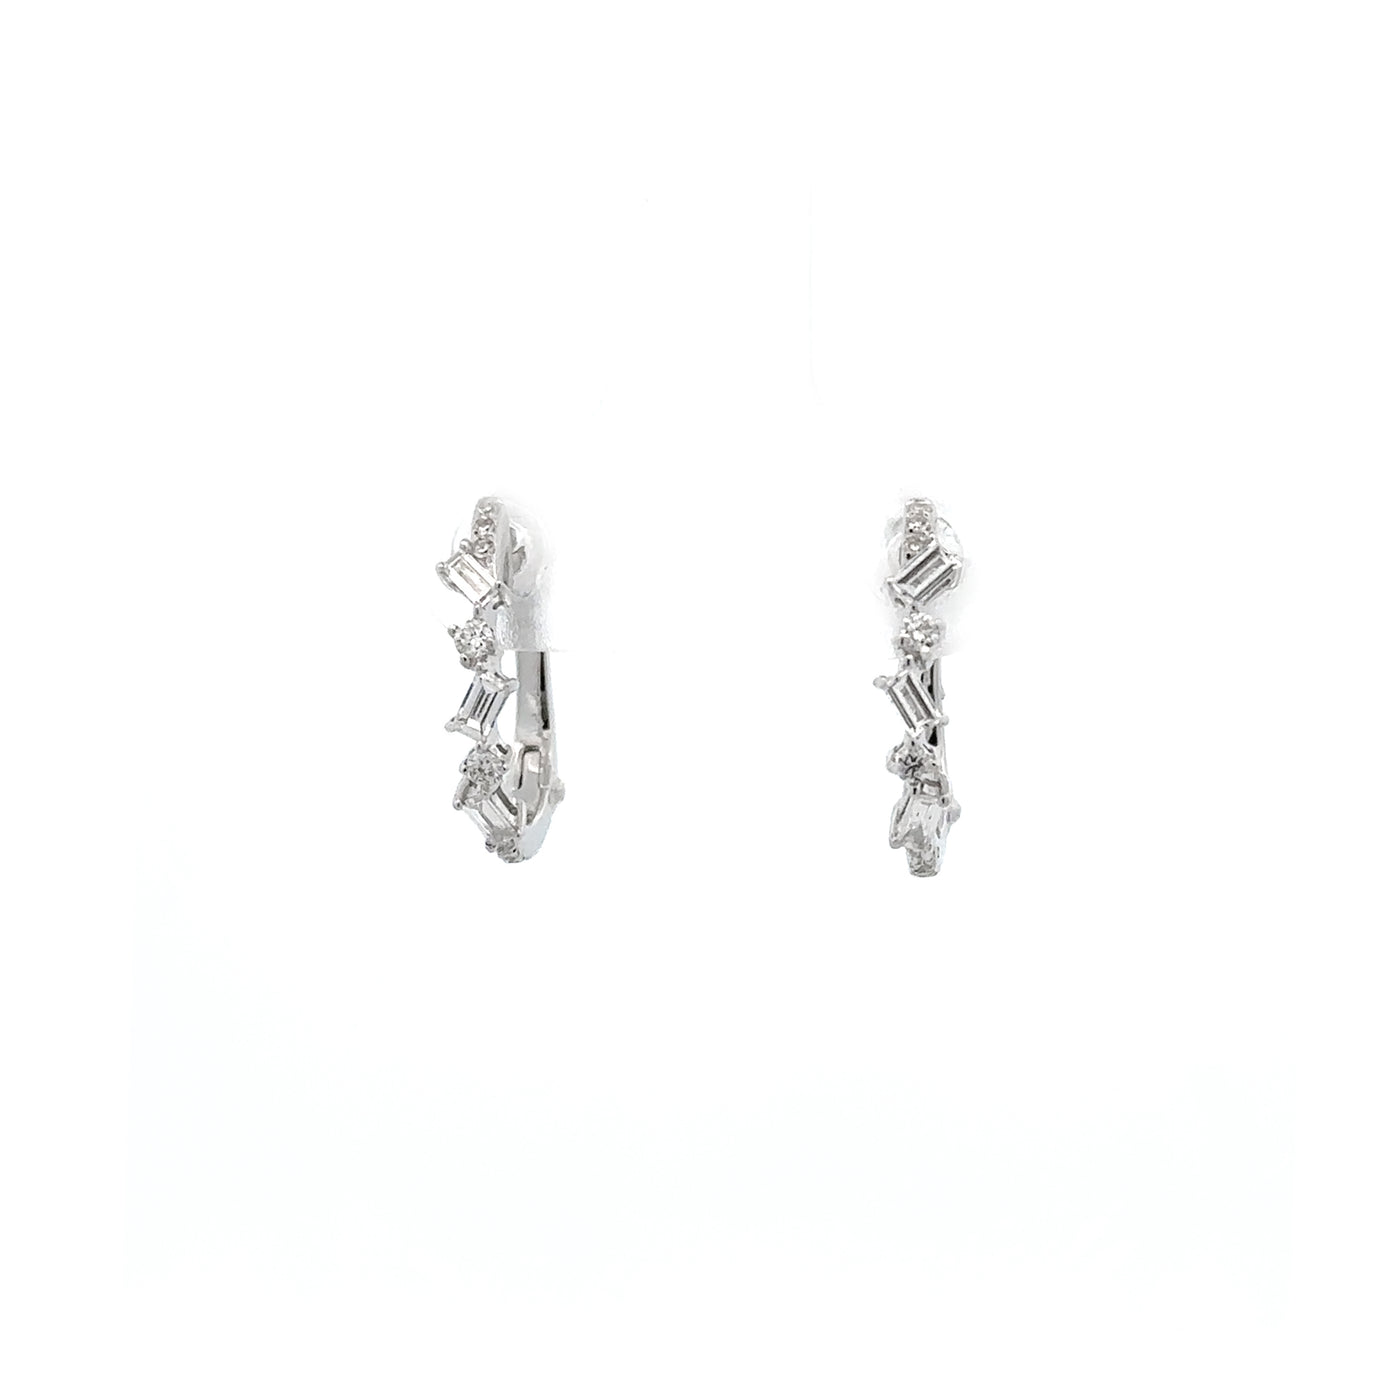 Baguette and Brilliant Cut Diamond Hoop Earrings in White Gold | 0.34ctw